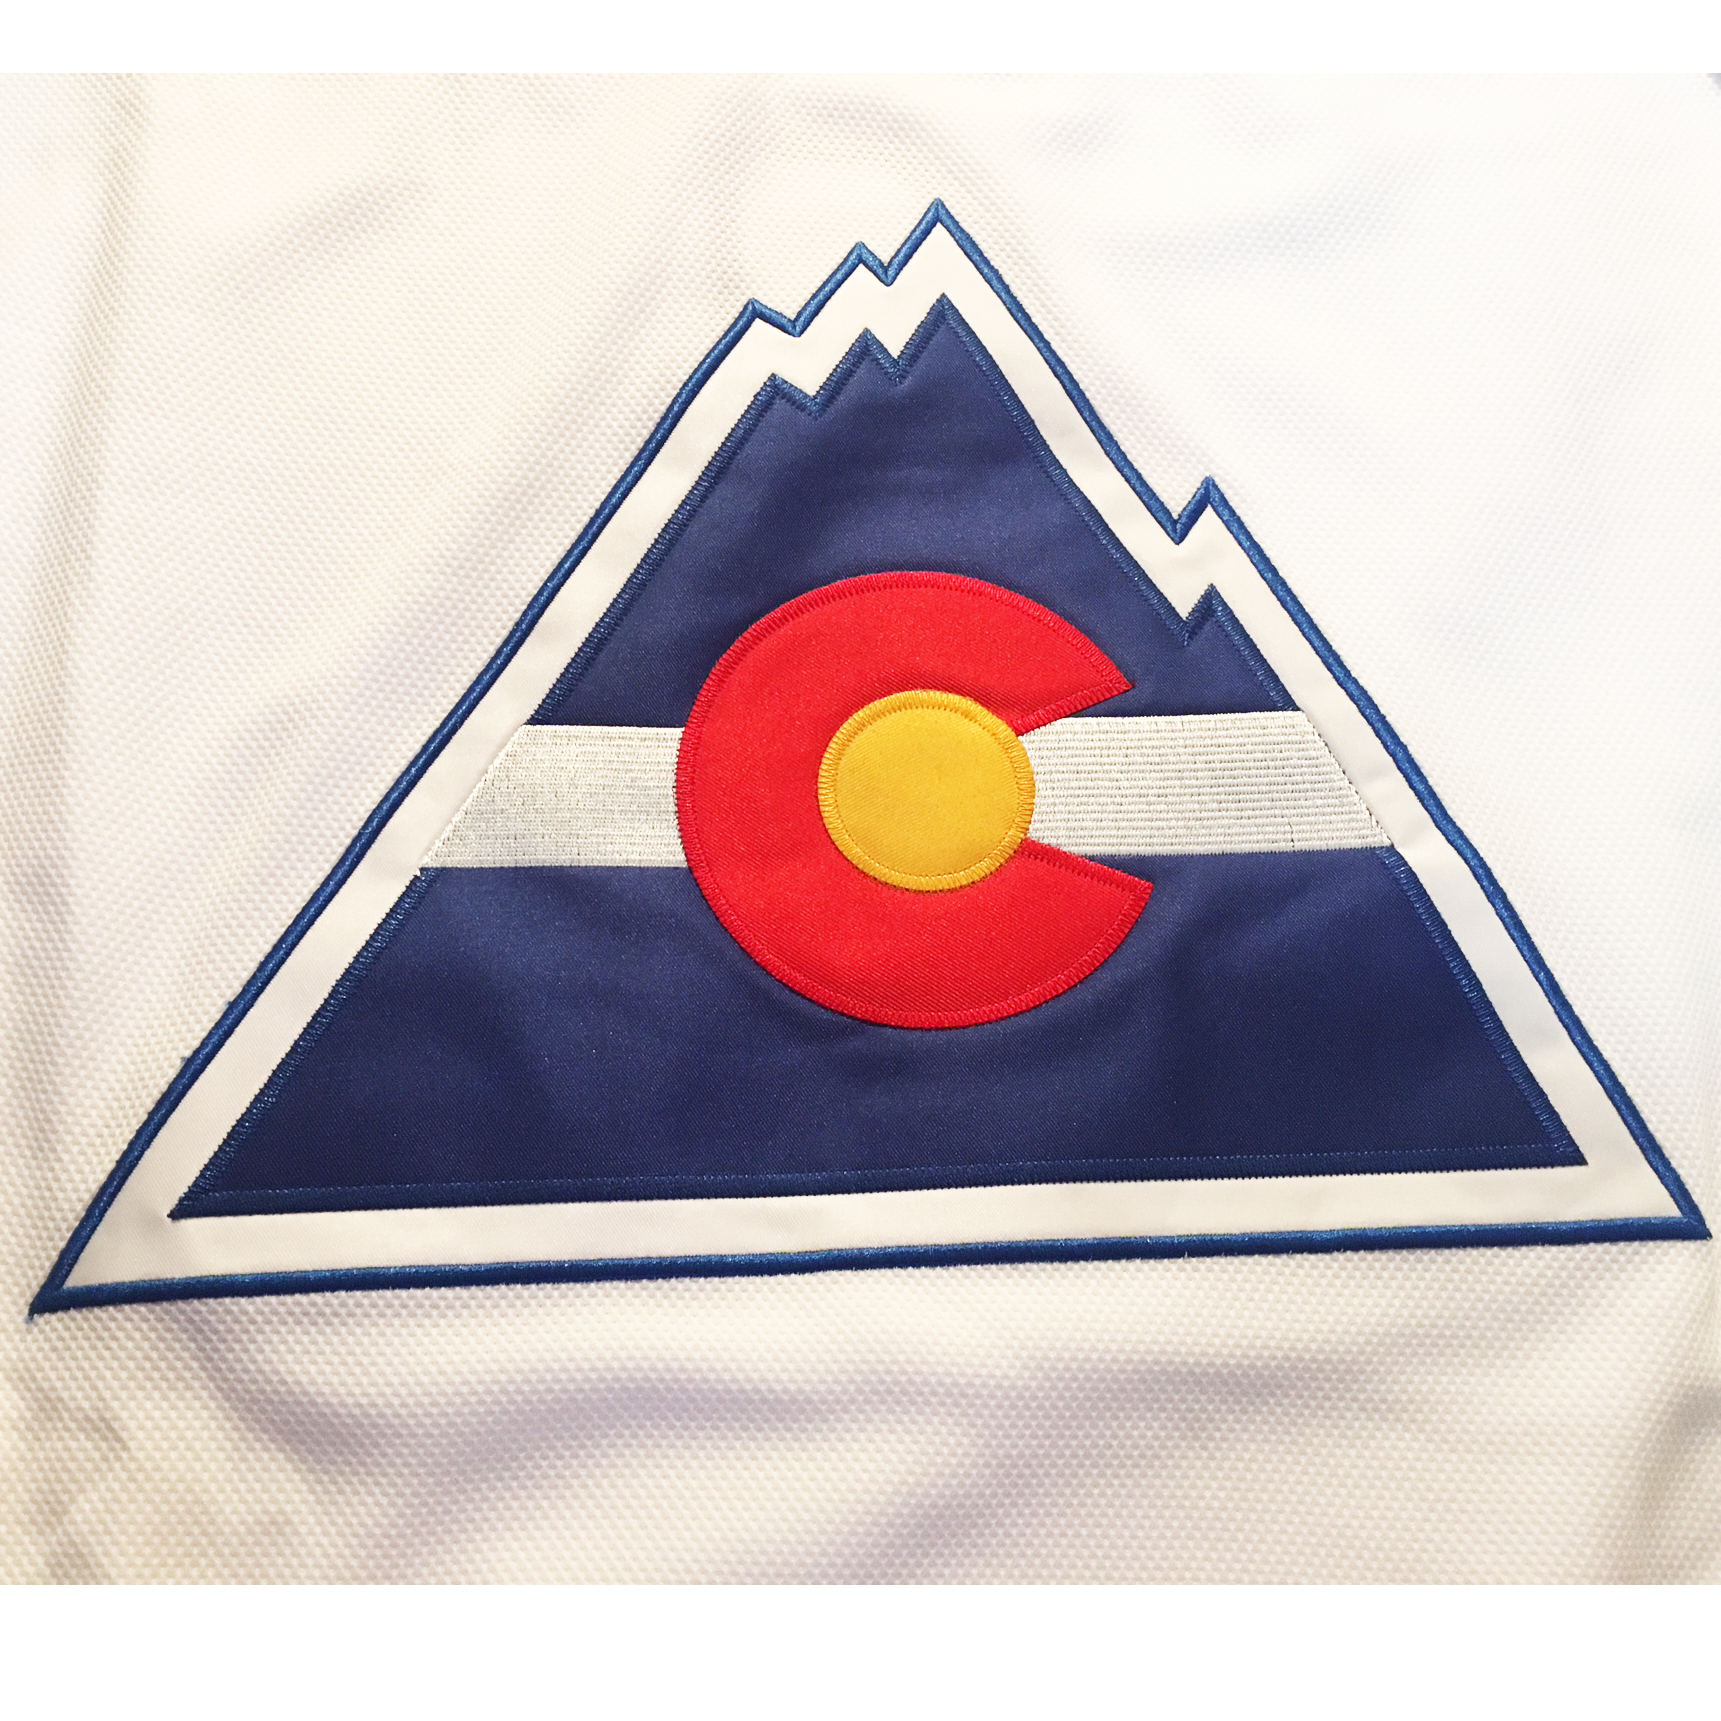 Colorado Rockies Jersey Logo - National Hockey League (NHL